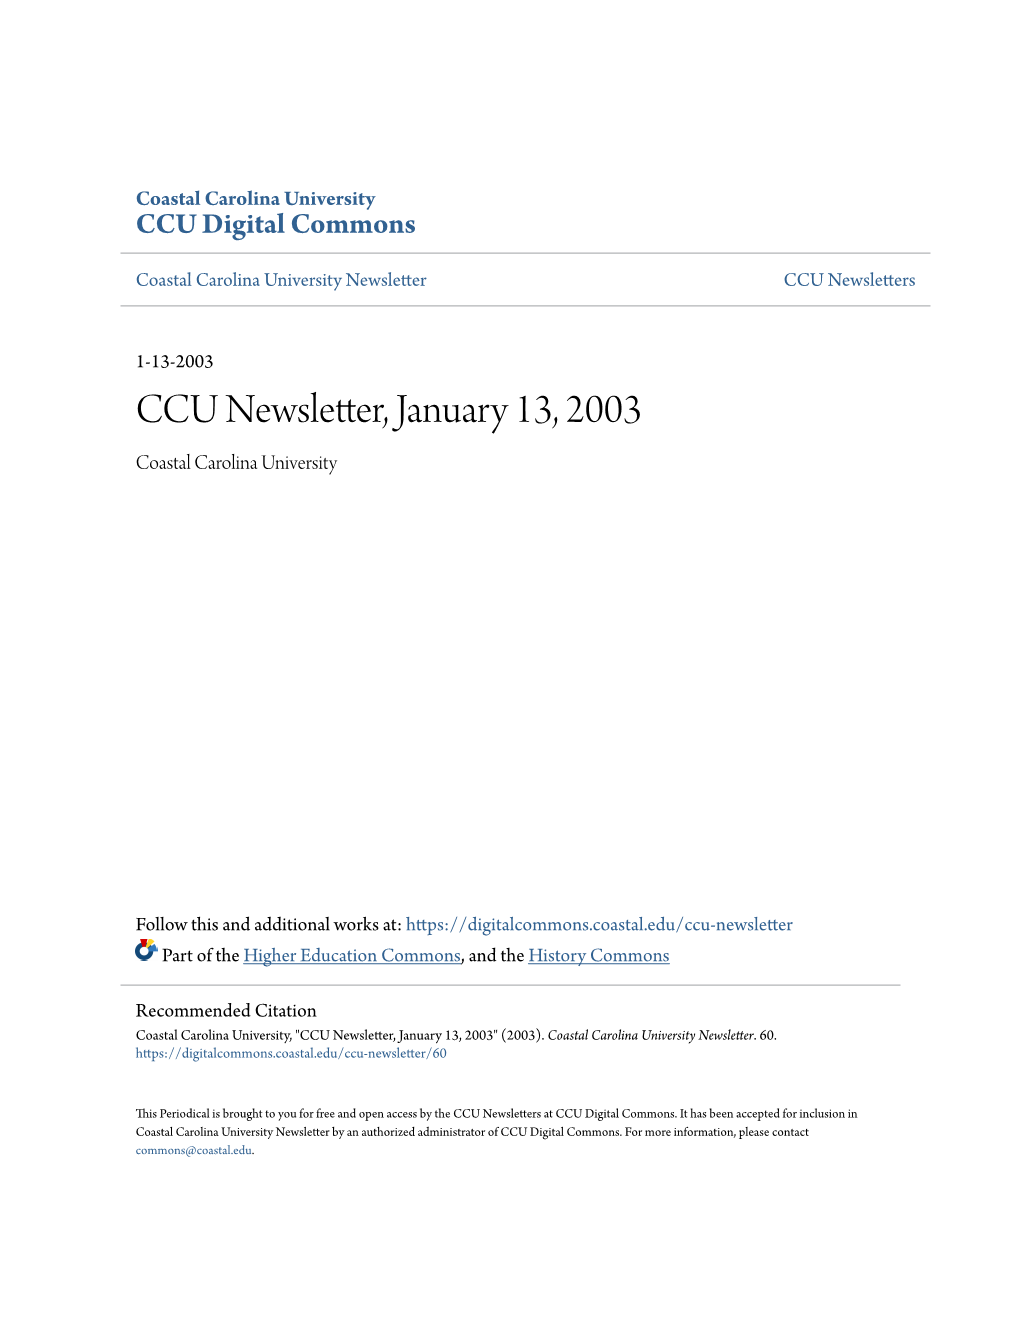 CCU Newsletter, January 13, 2003 Coastal Carolina University